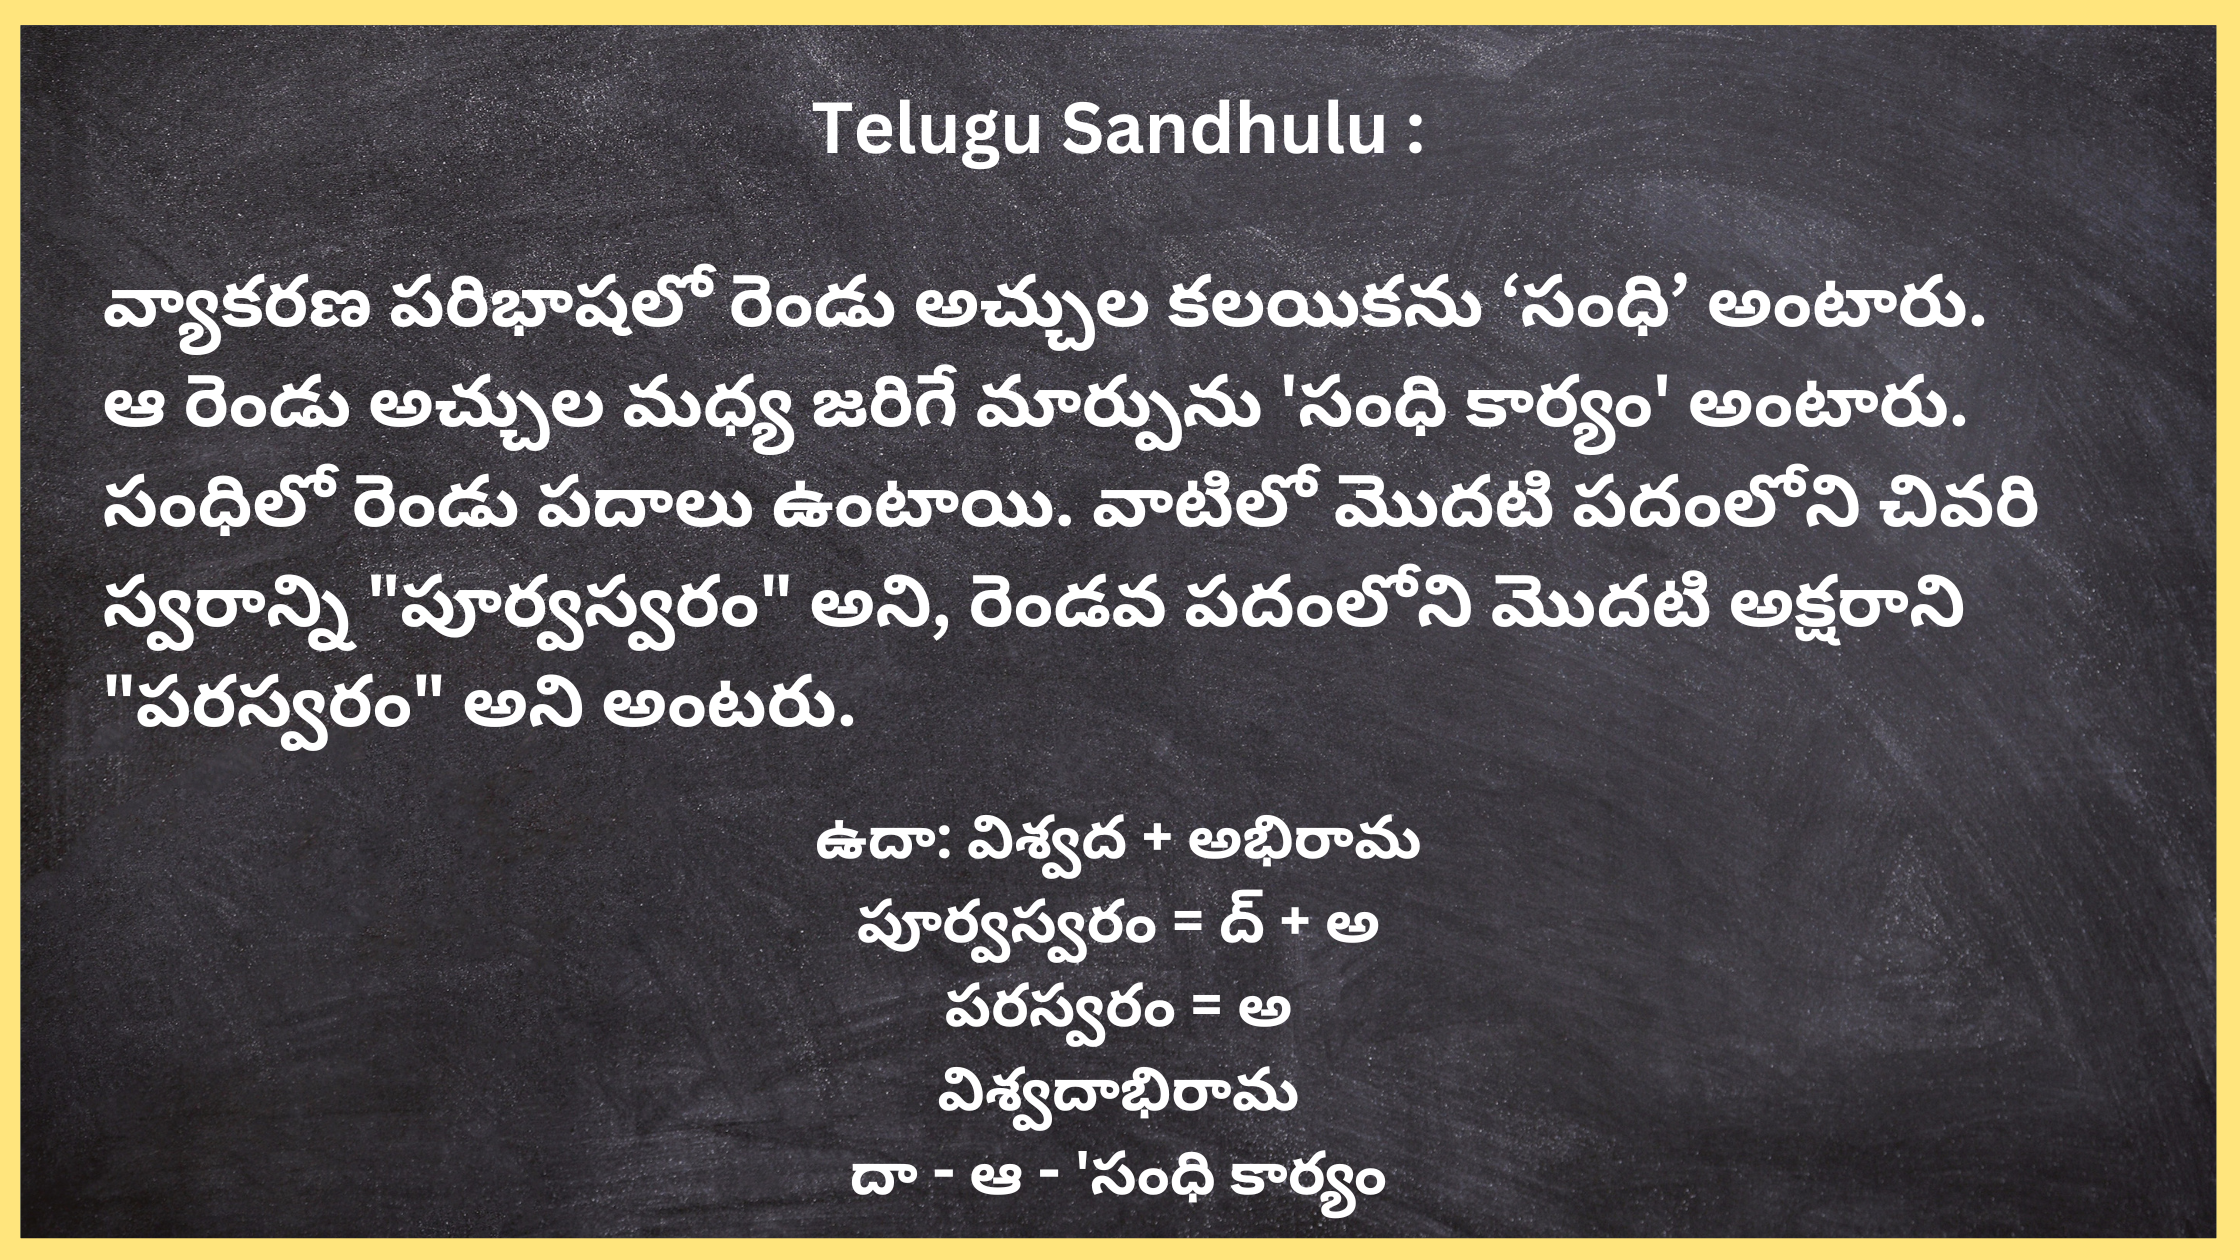 Telugu Sandhulu